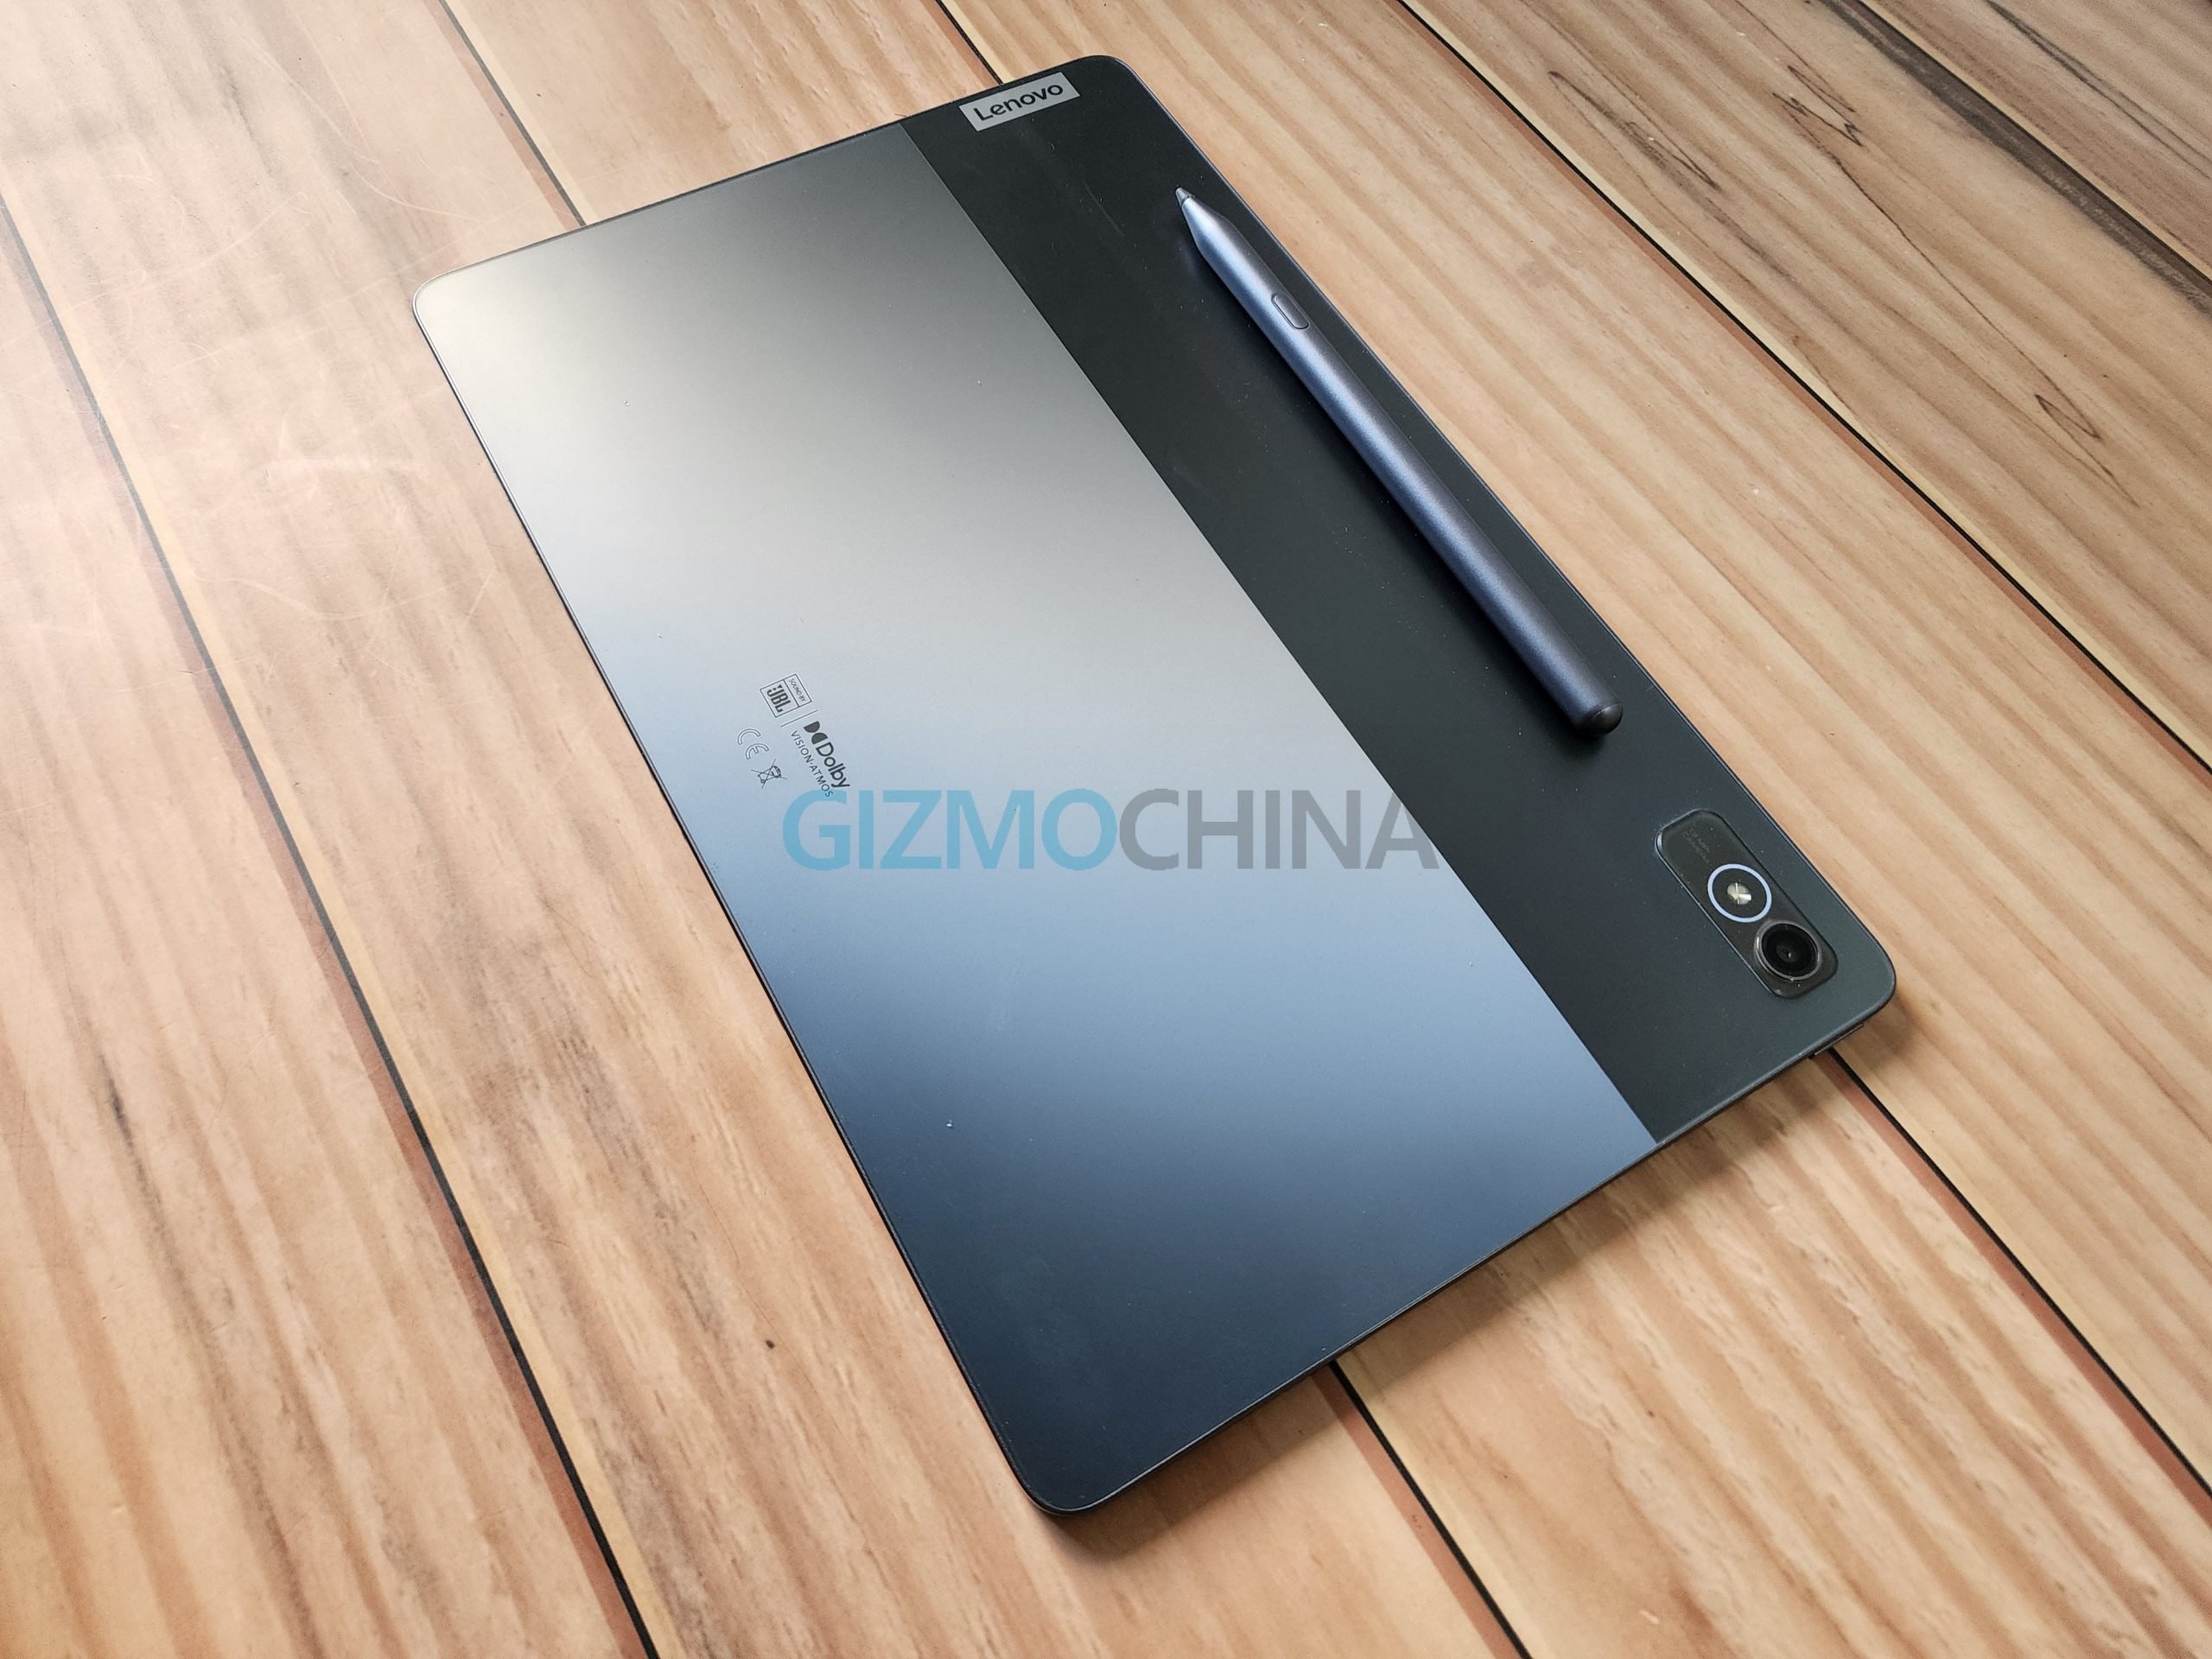 Lenovo Tab P11 Plus tablet review verdict: Potential unfortunately